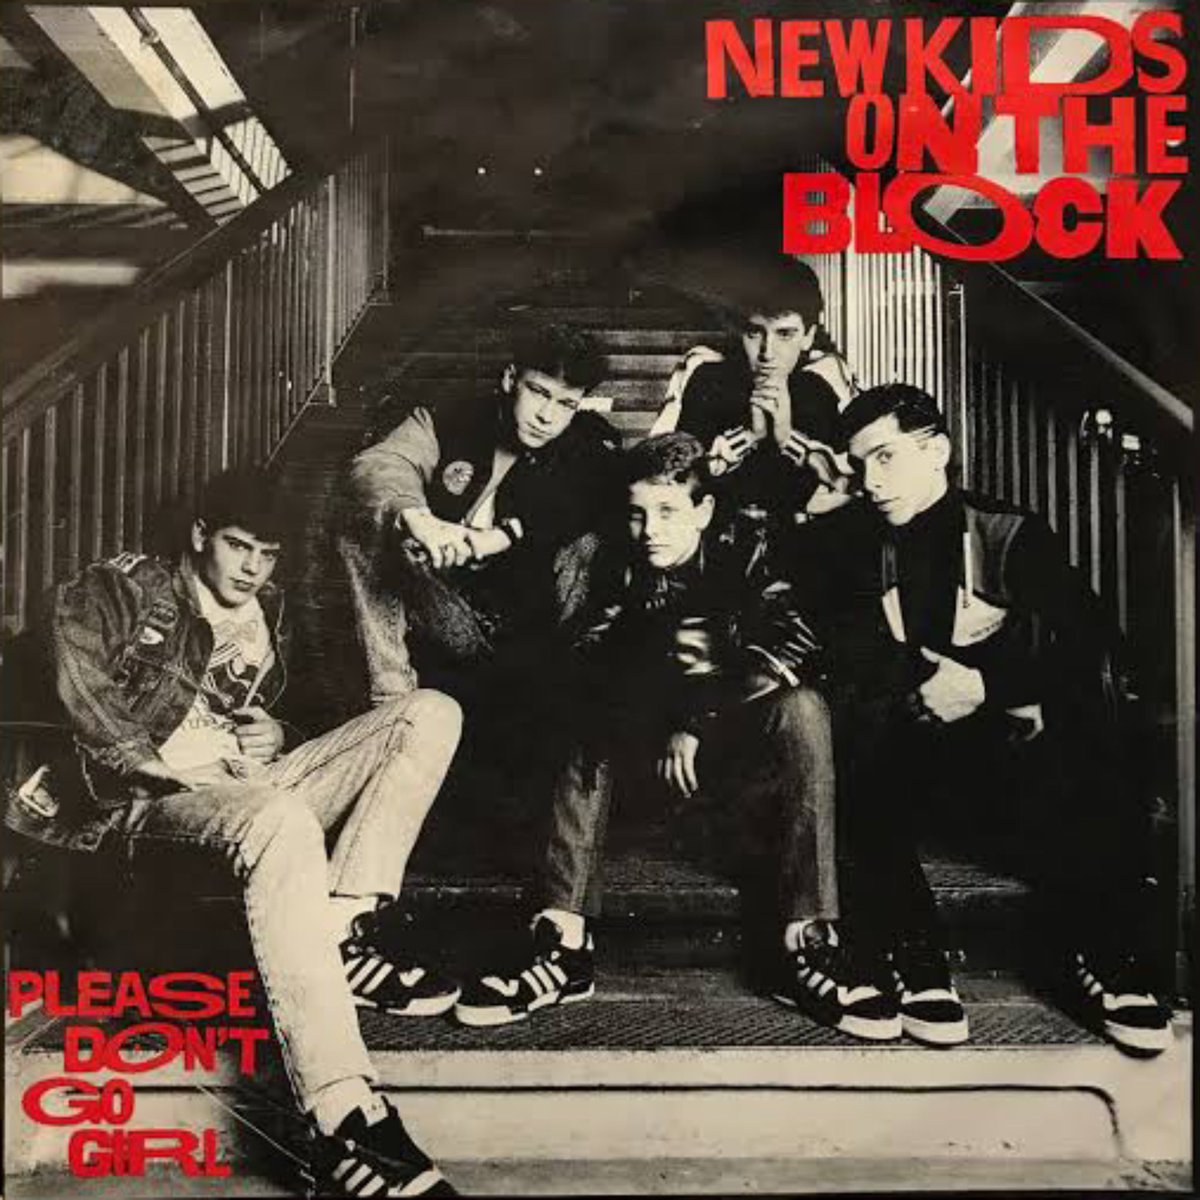 M6 Please Don't Go GIrl / New Kids On The Block

#80sラジマガ
#80s
#NewKidsOnTheBlock
#Radiotsukuba
#ラヂオつくば